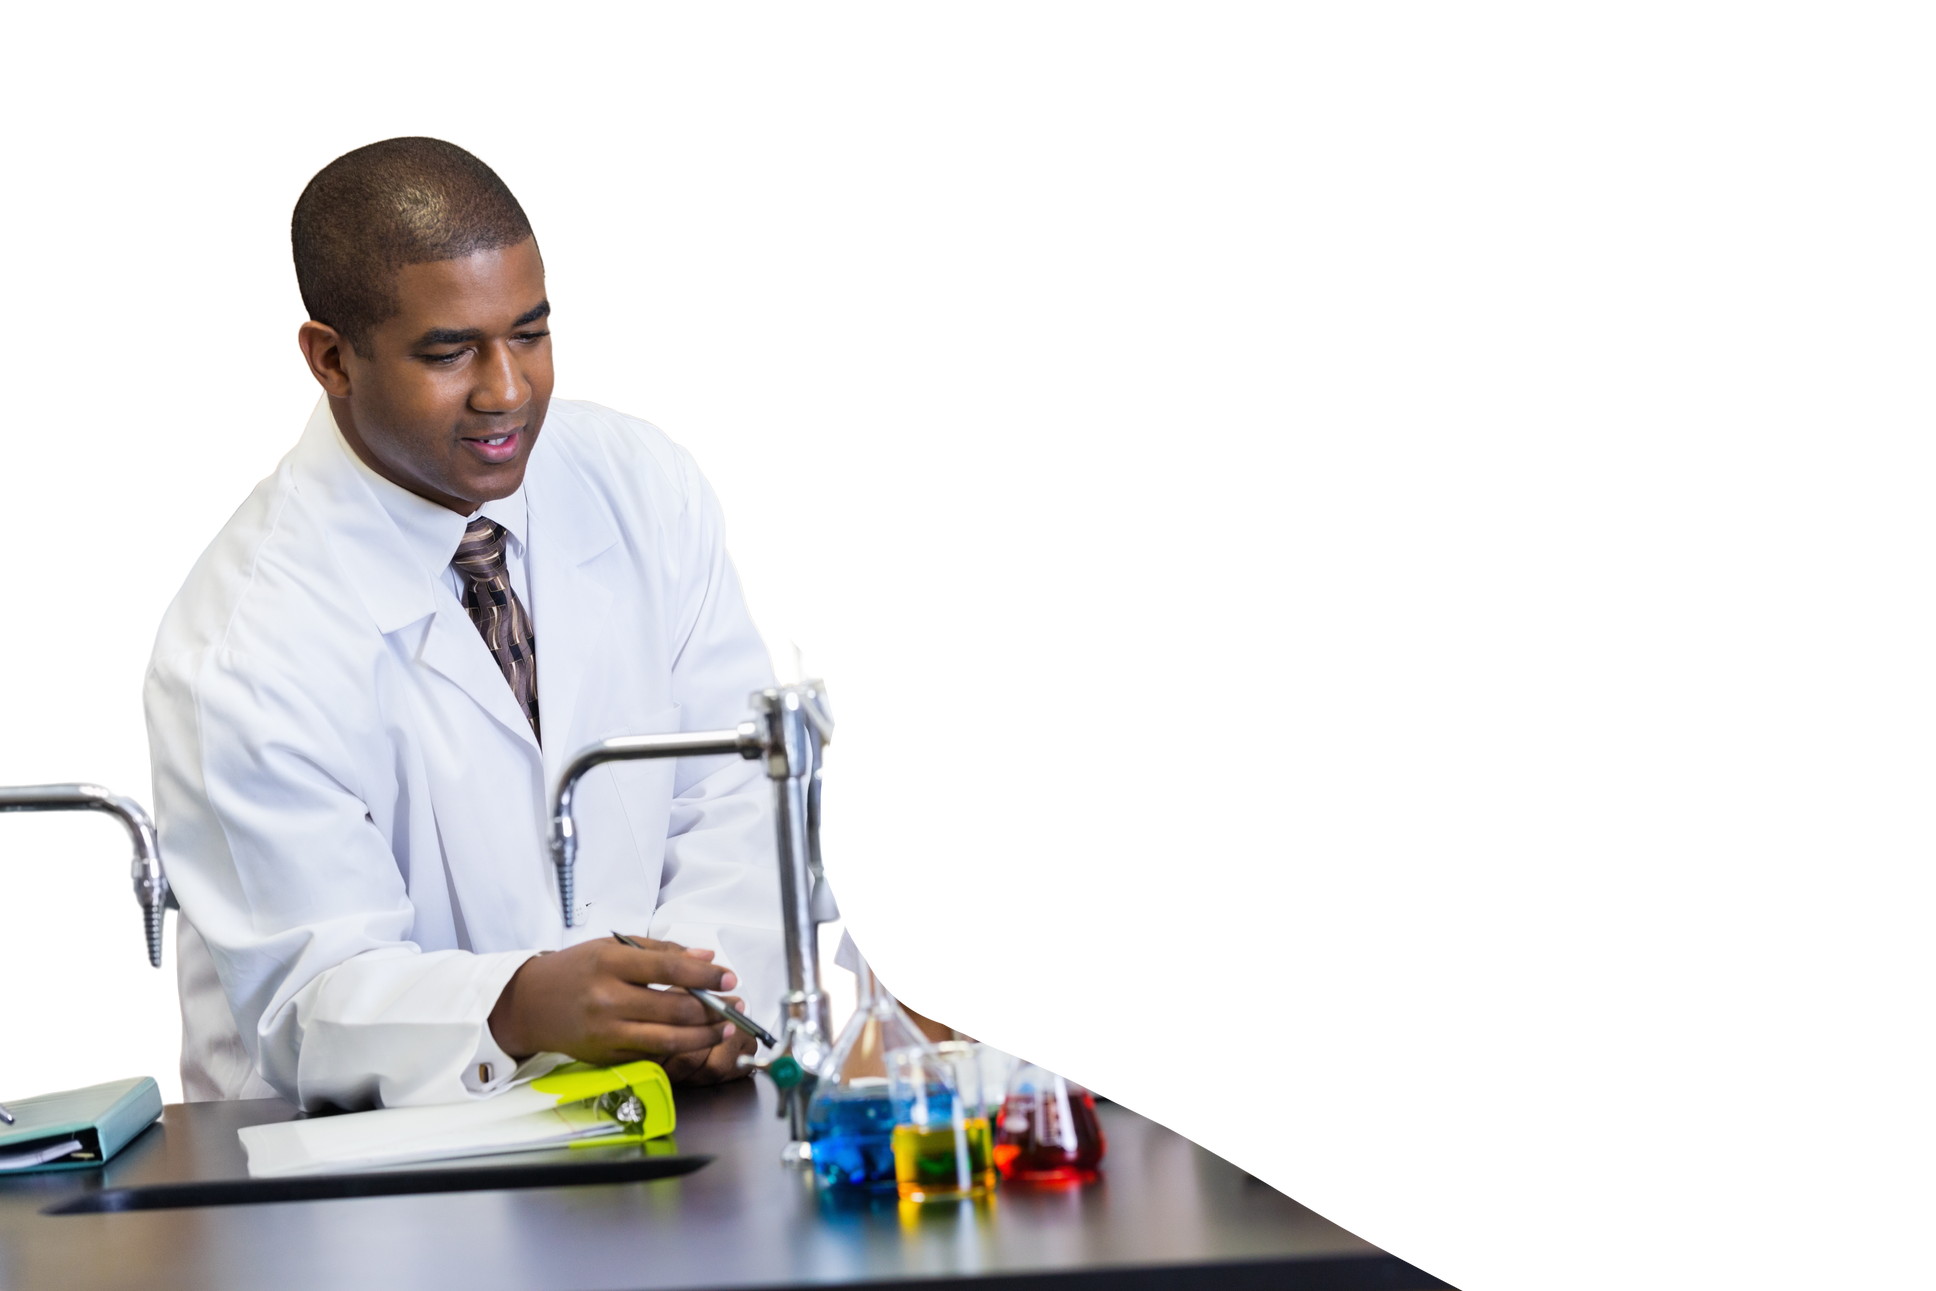 African American teacher teaching students in high school science classroom